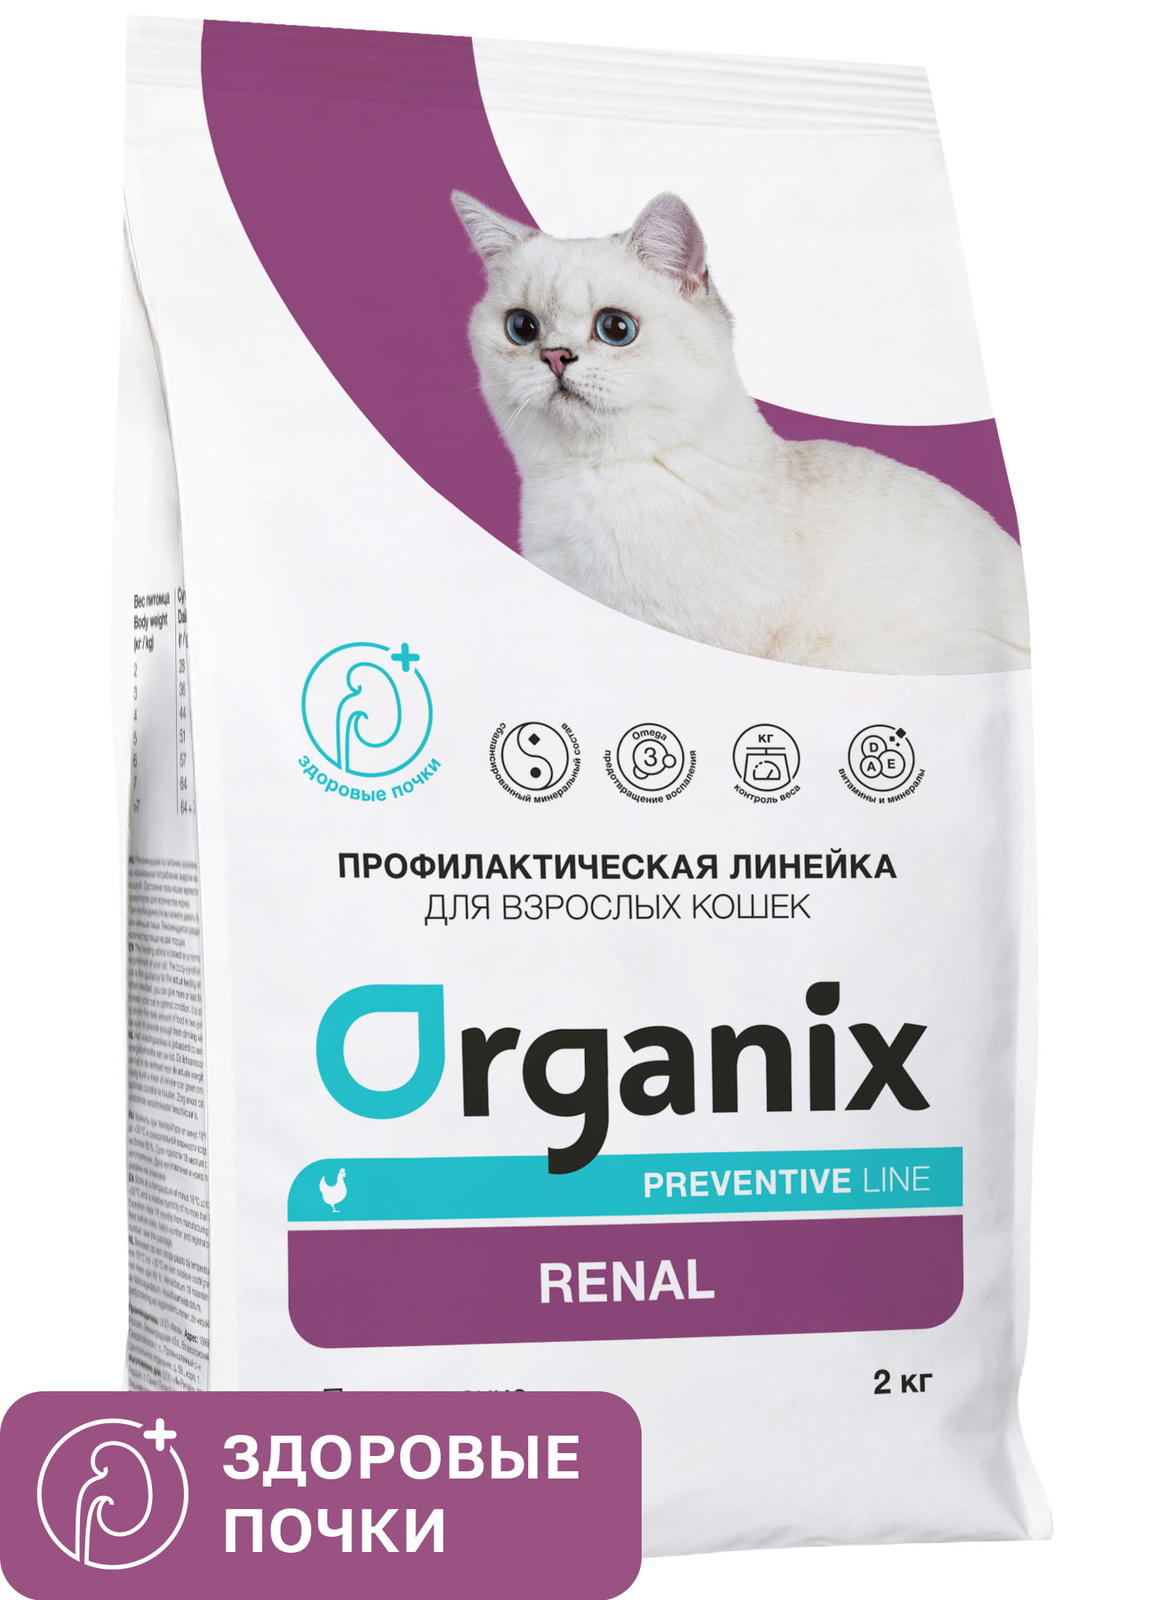 Organix Preventive Line renal сухой корм для кошек 